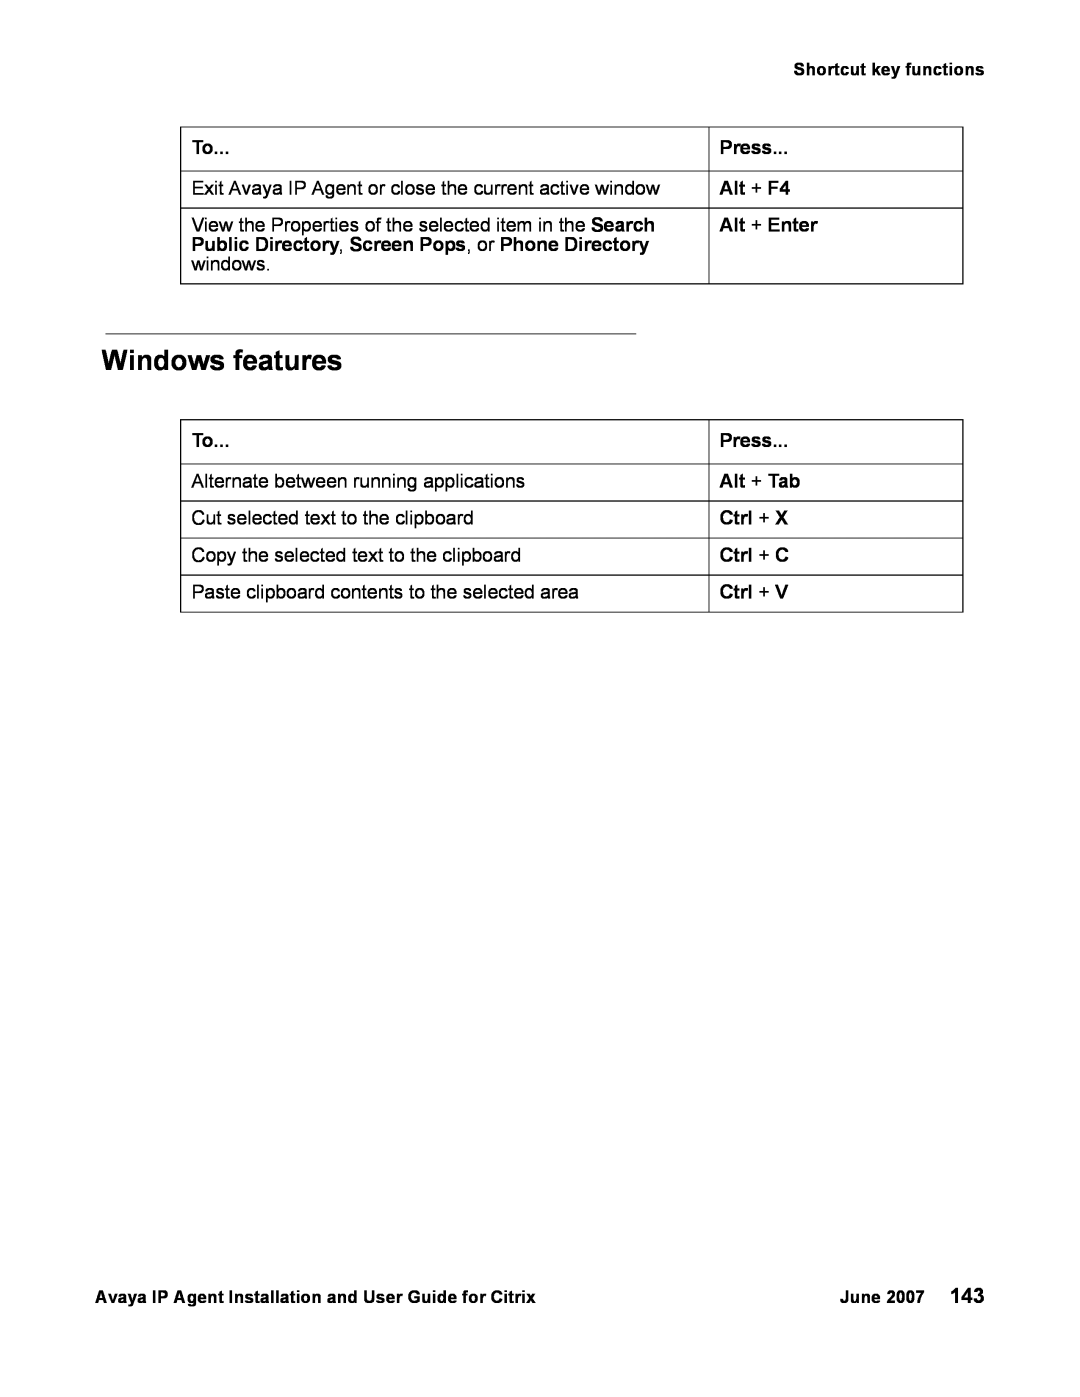 Avaya 7 manual Windows features 